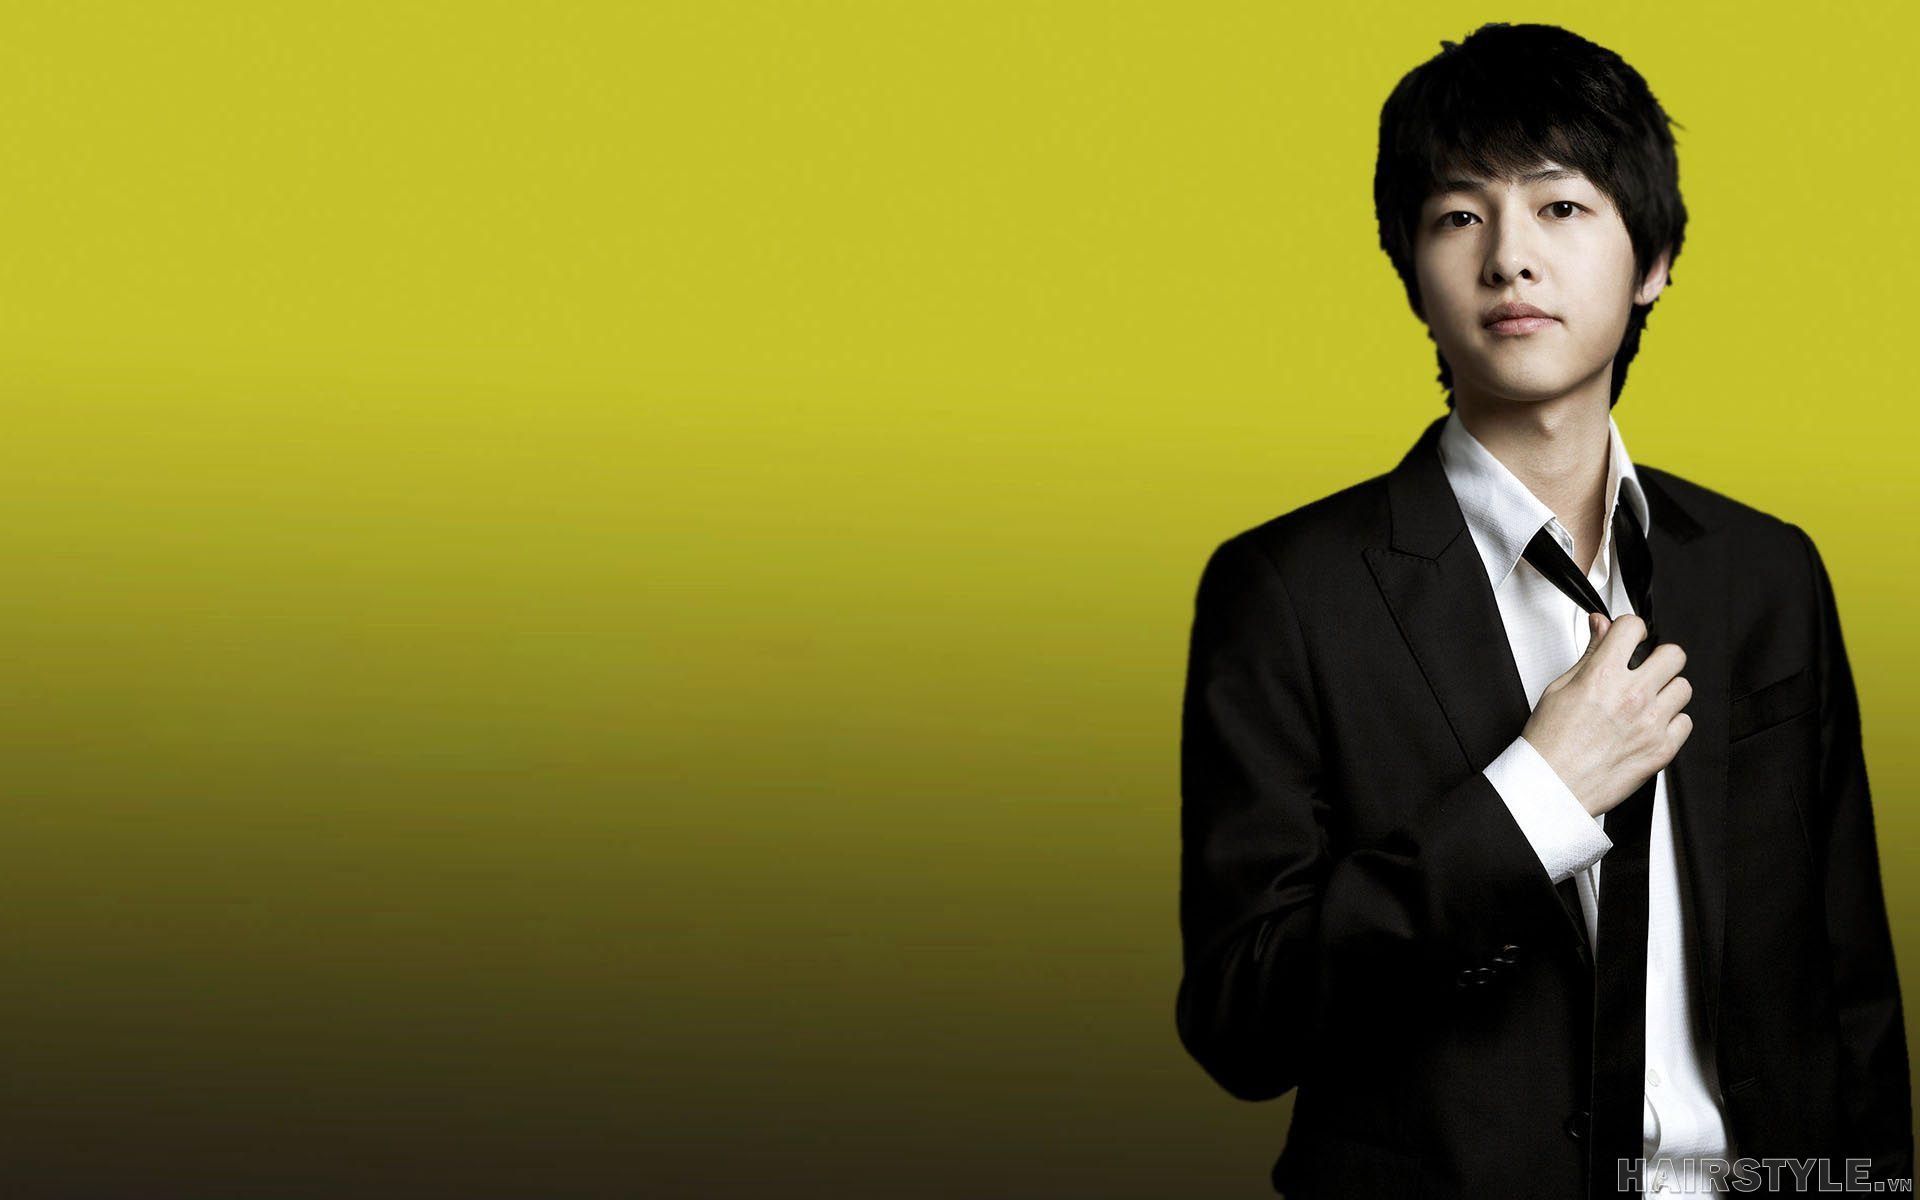 song joong ki wallpaper,suit,yellow,white collar worker,formal wear,businessperson